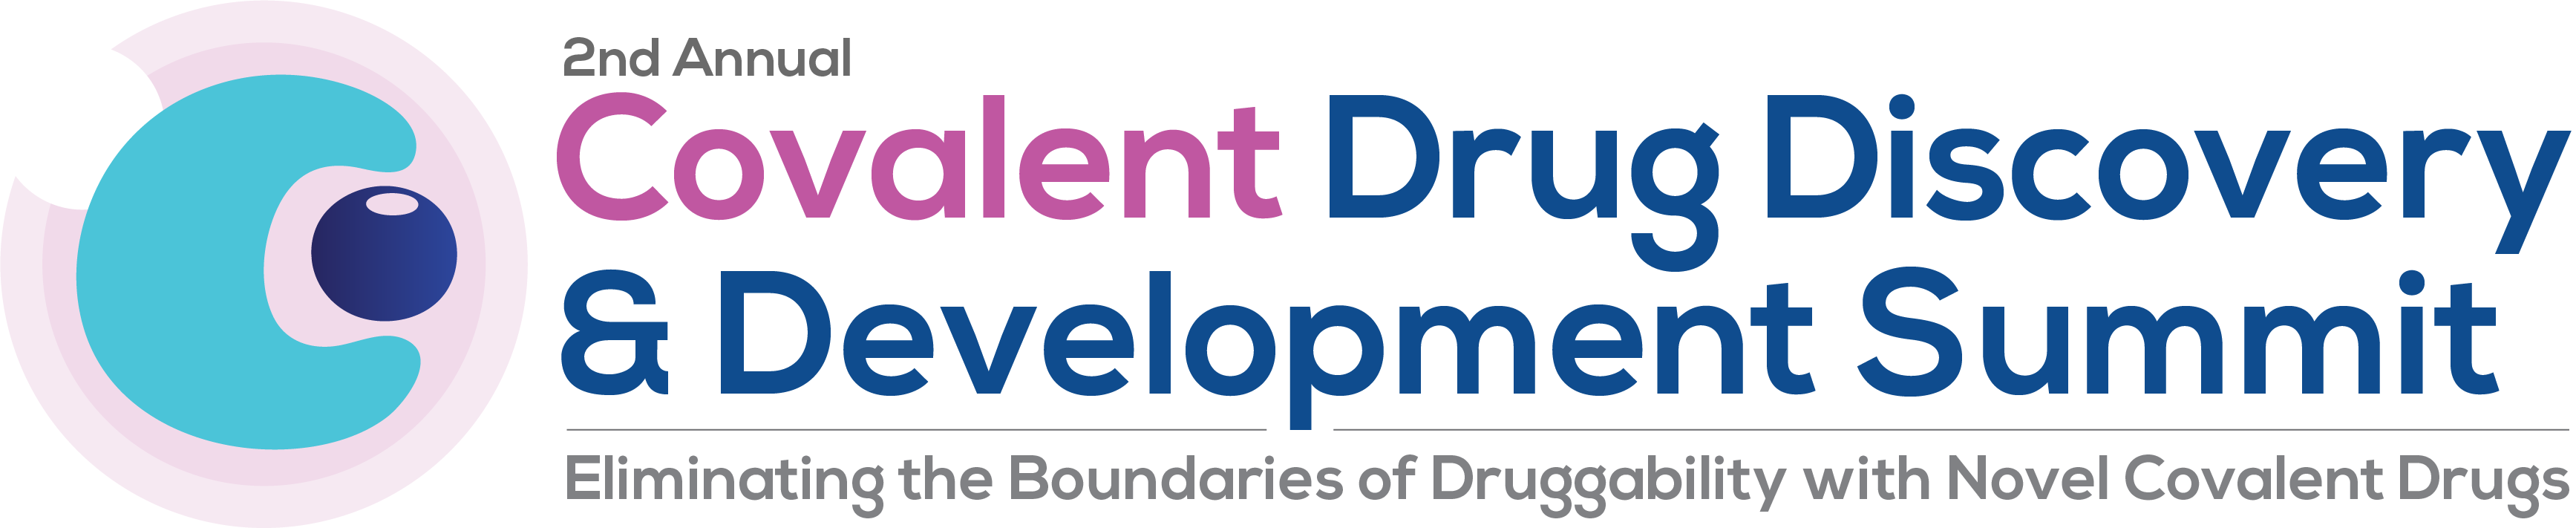 Covalent Drug Discovery Summit Strapline